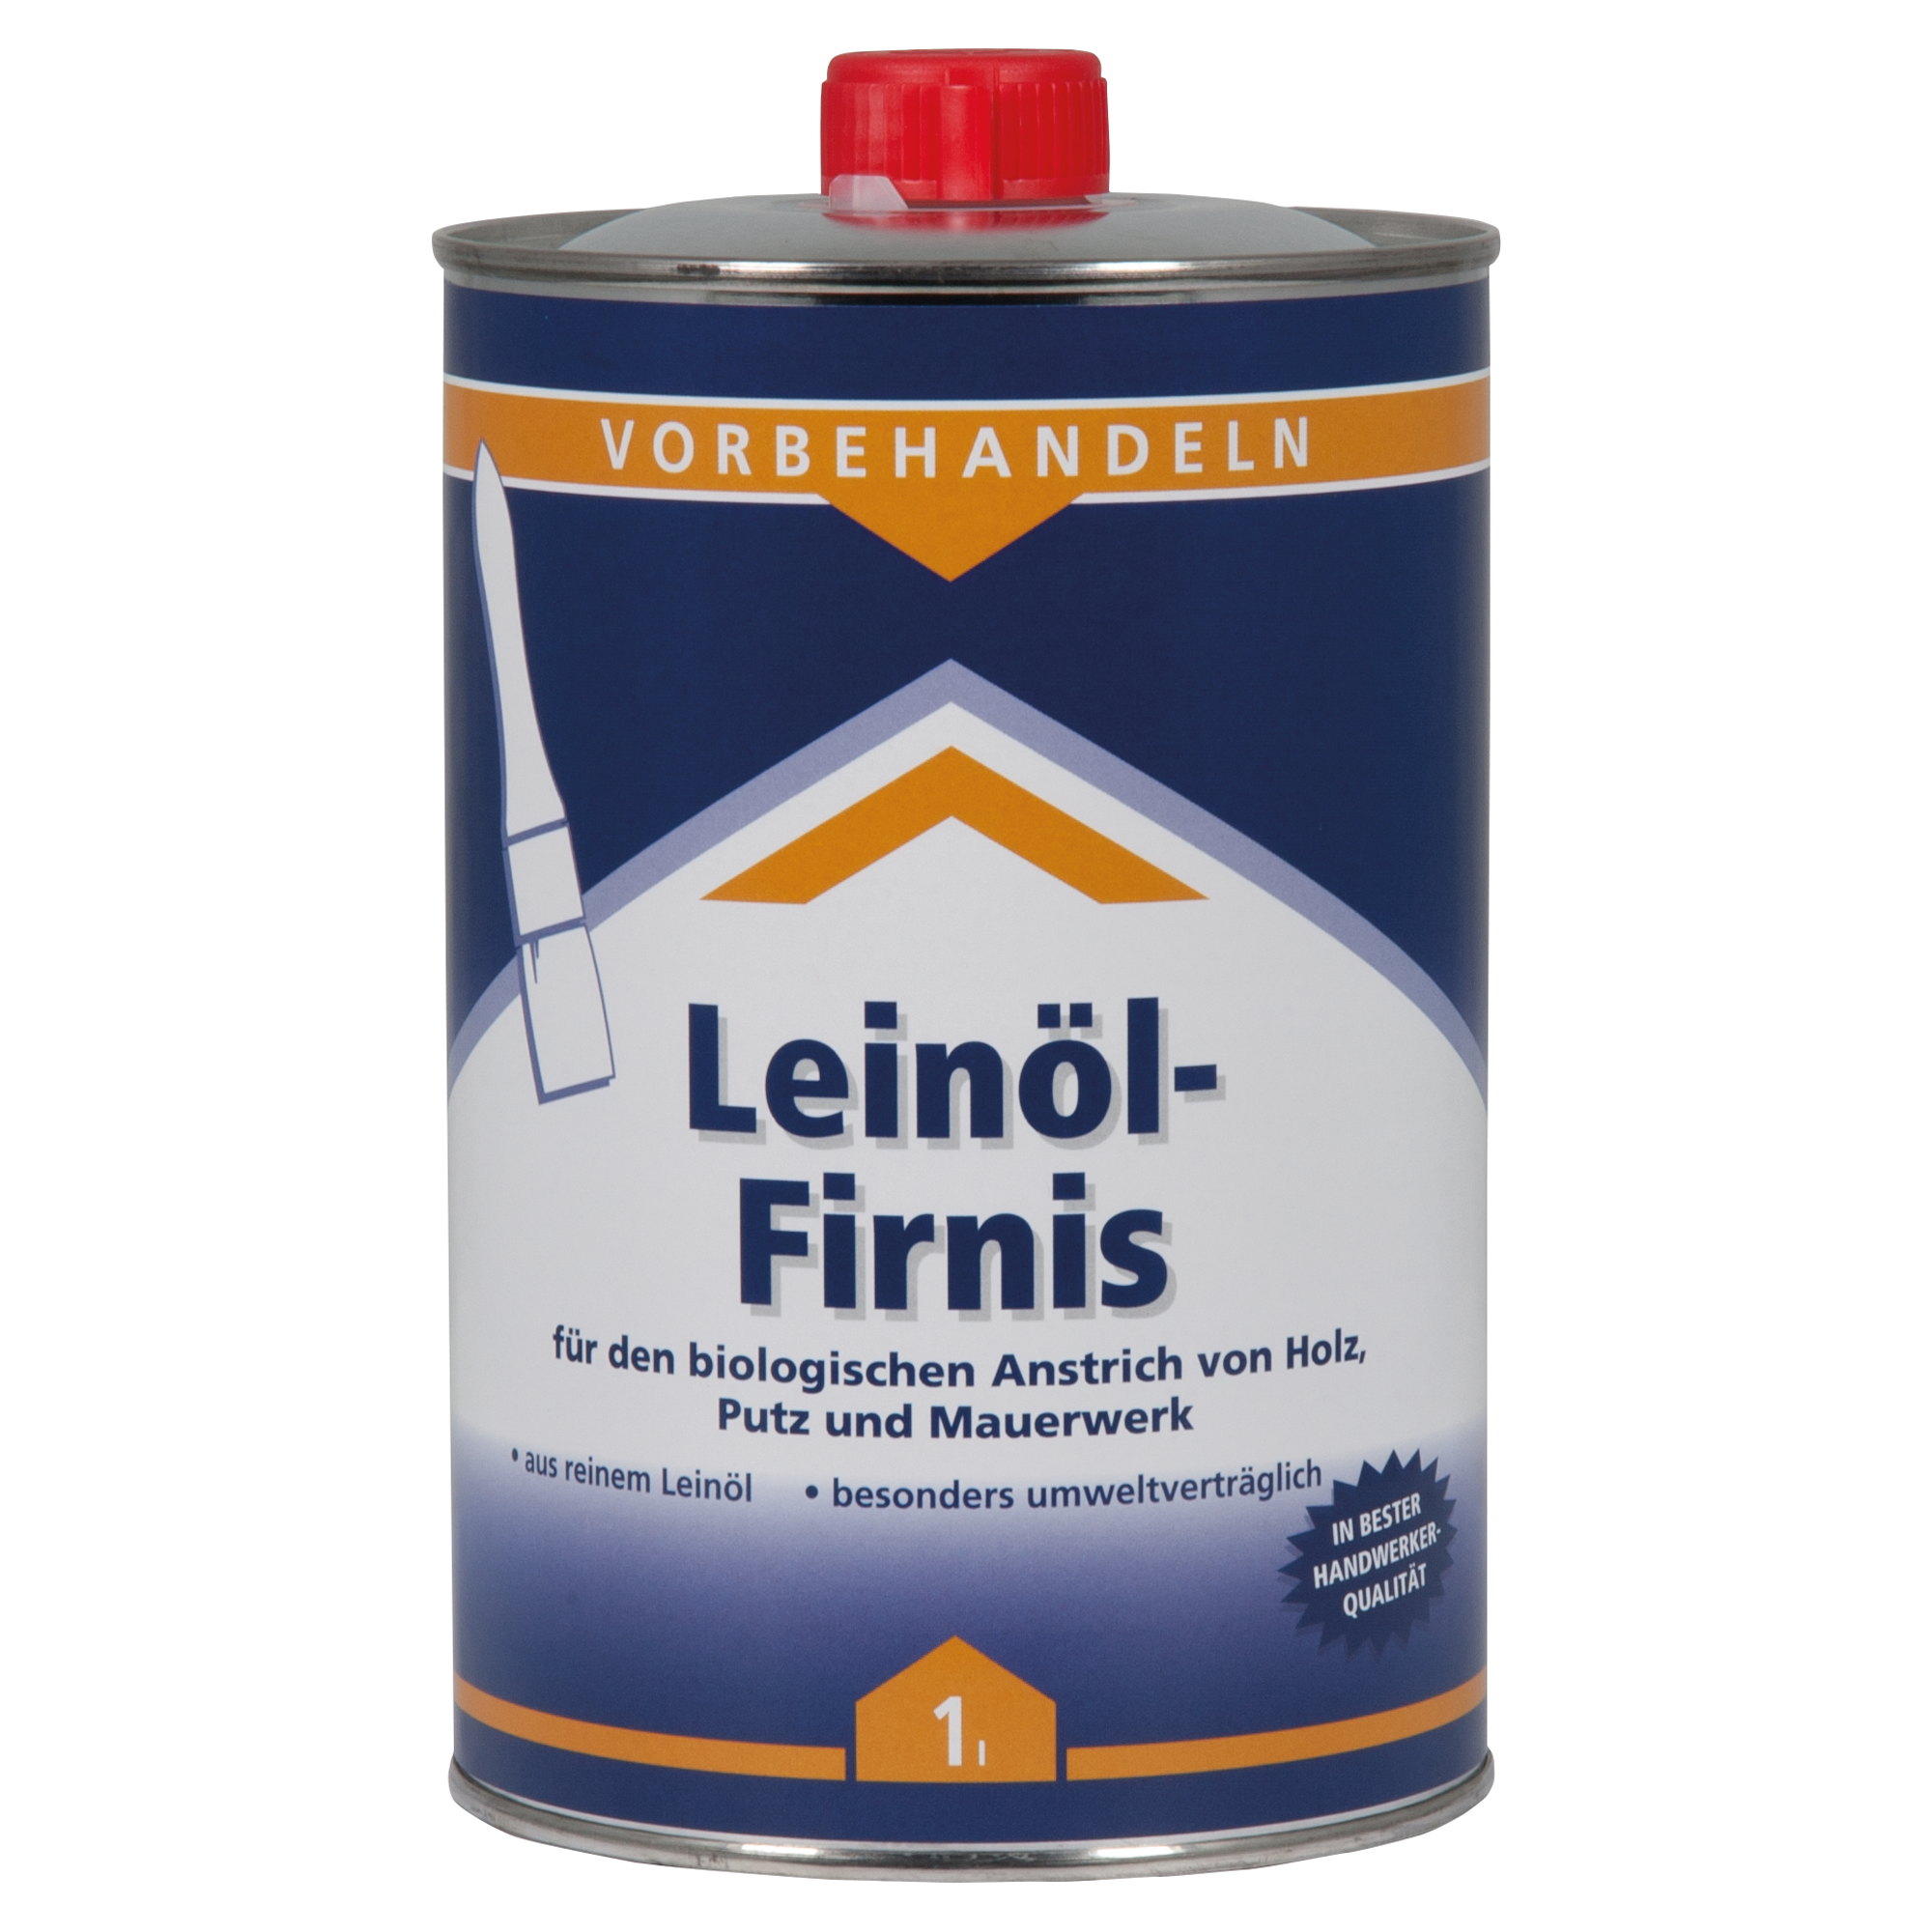 Leinöl-Firnis 1 l + product picture